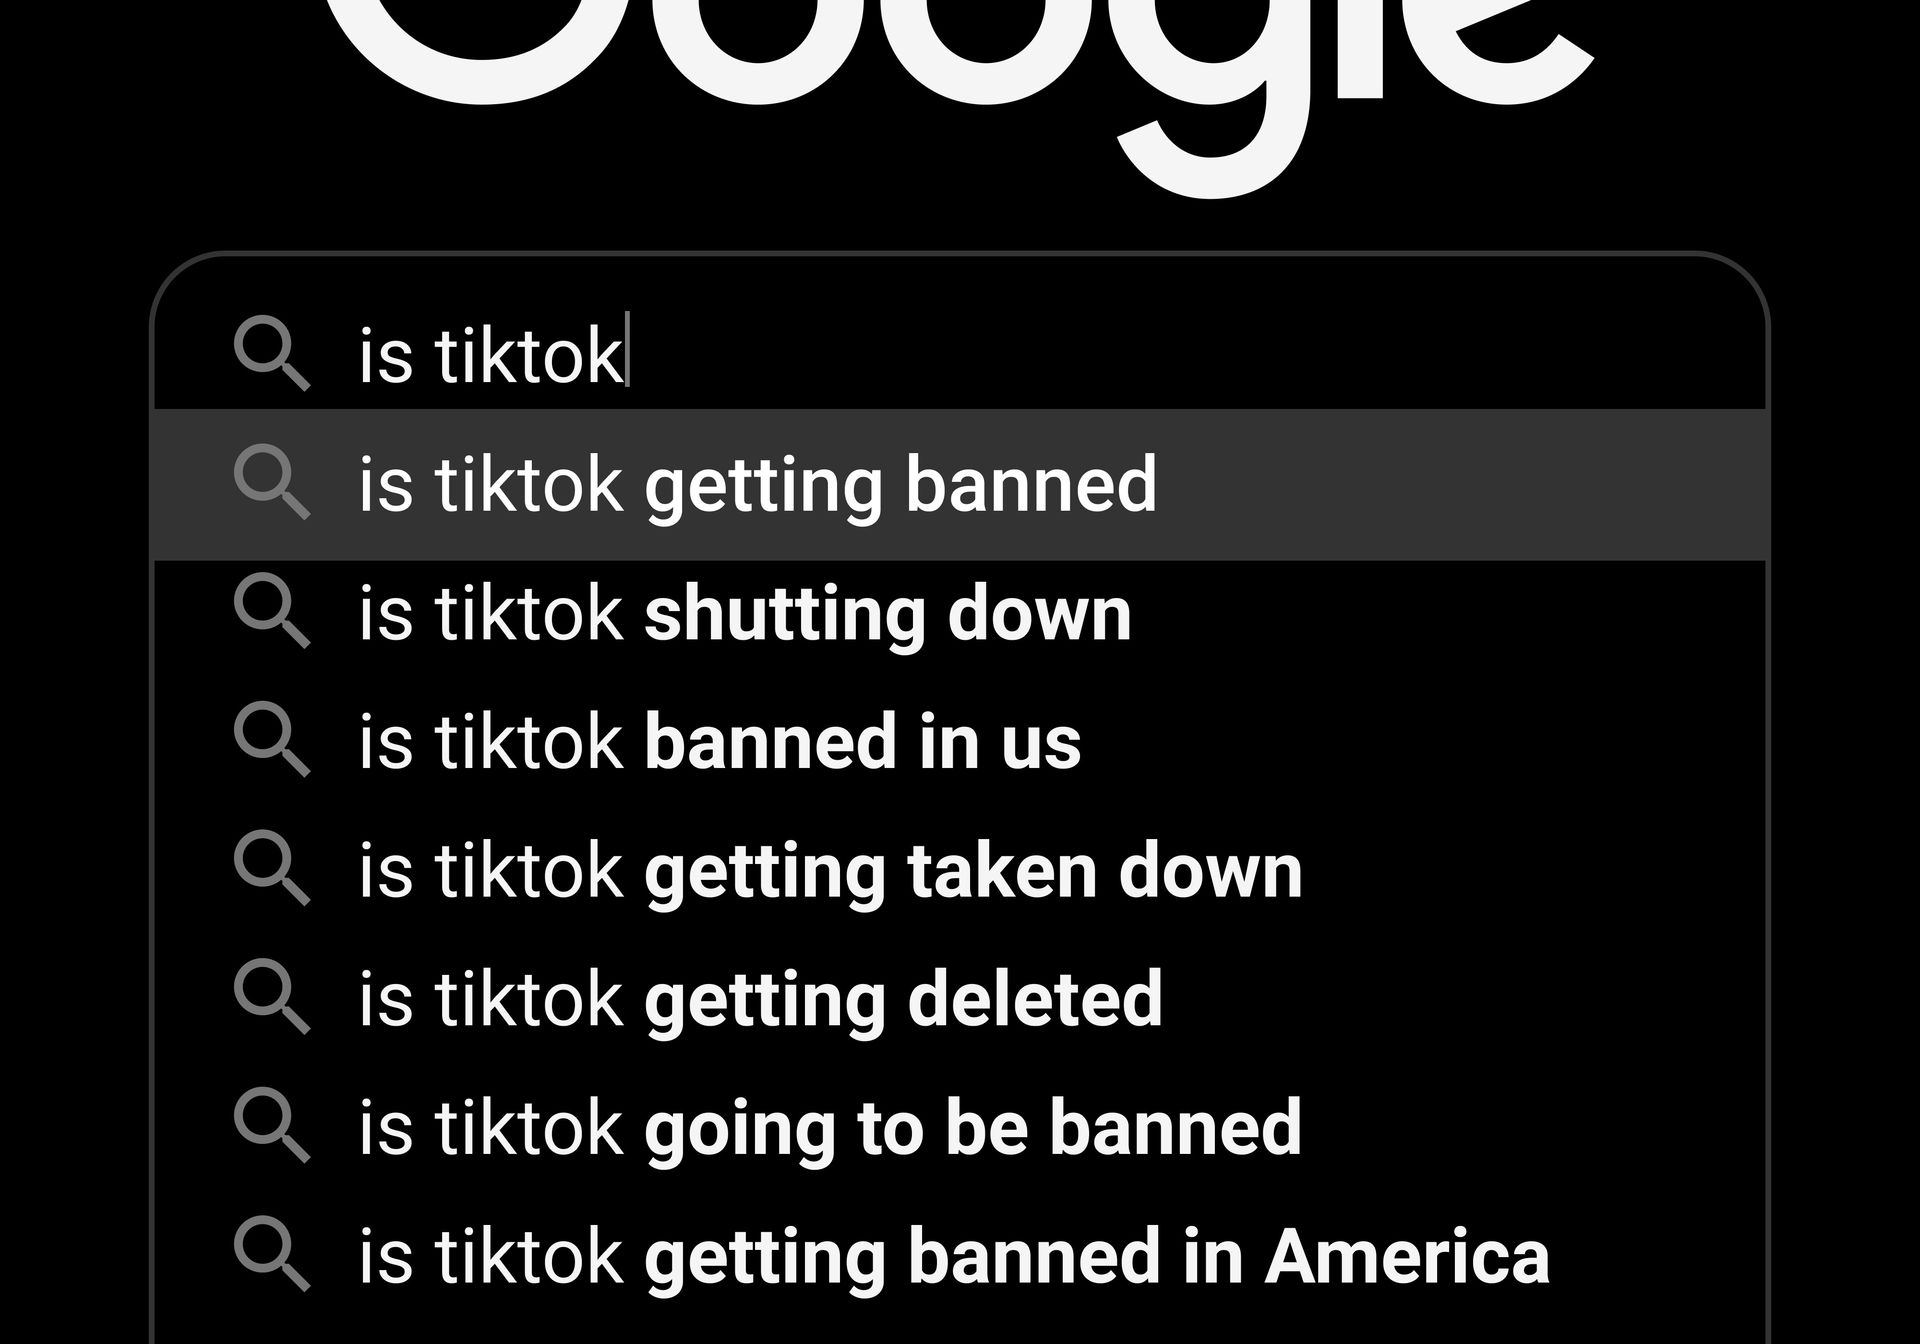 Preguntas futuras: ¿TikTok está prohibido o vendido?